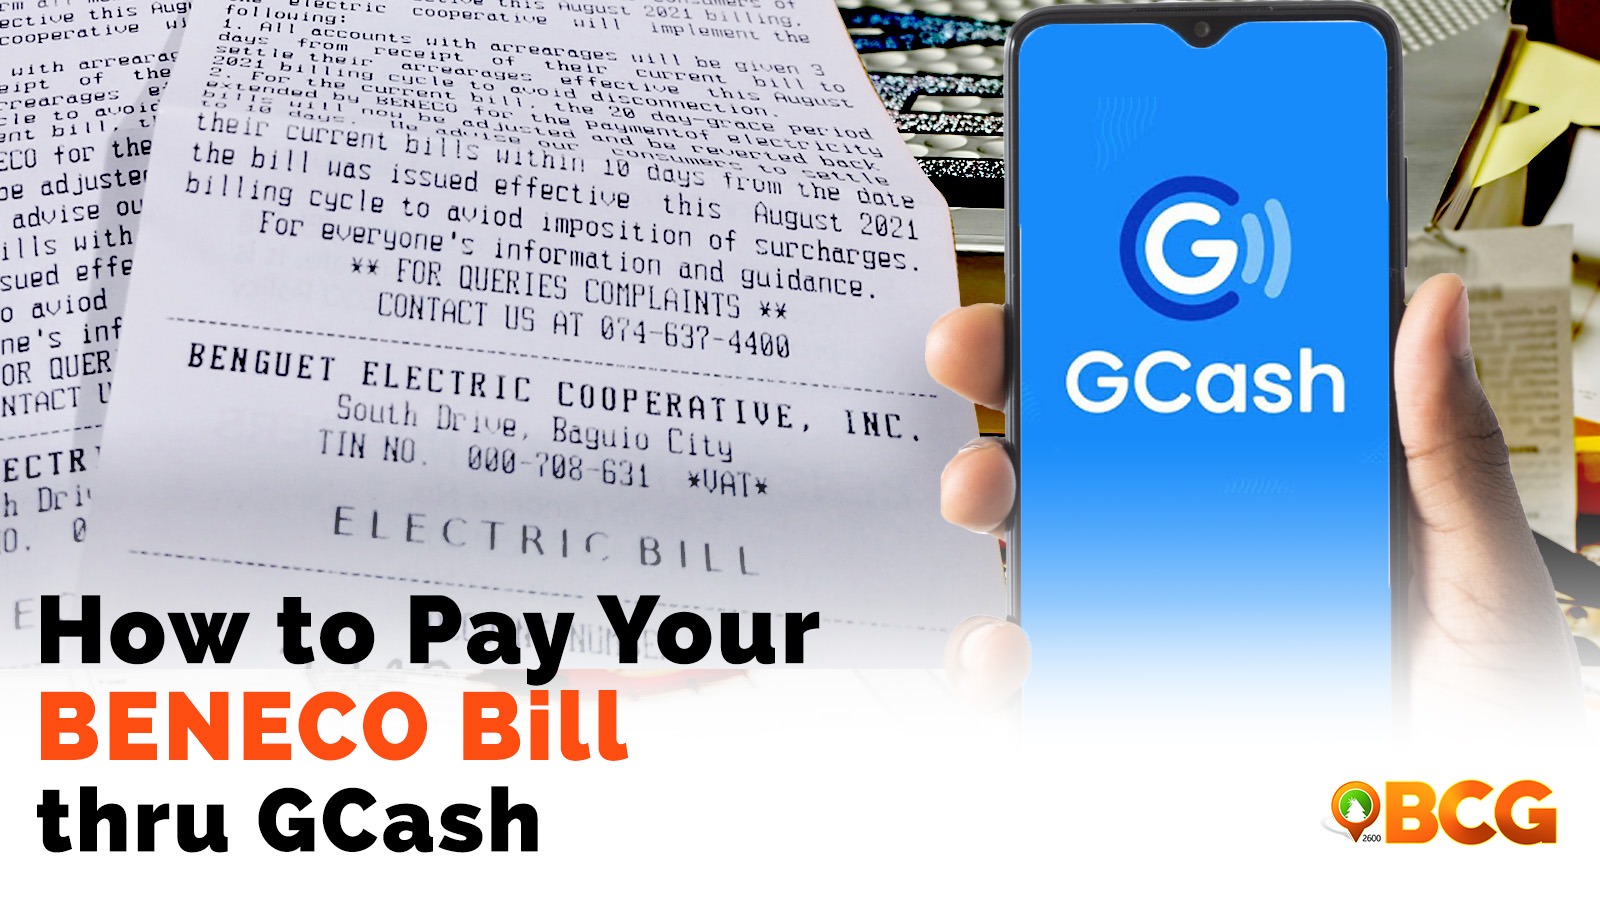 How to Pay BENECO Using GCash